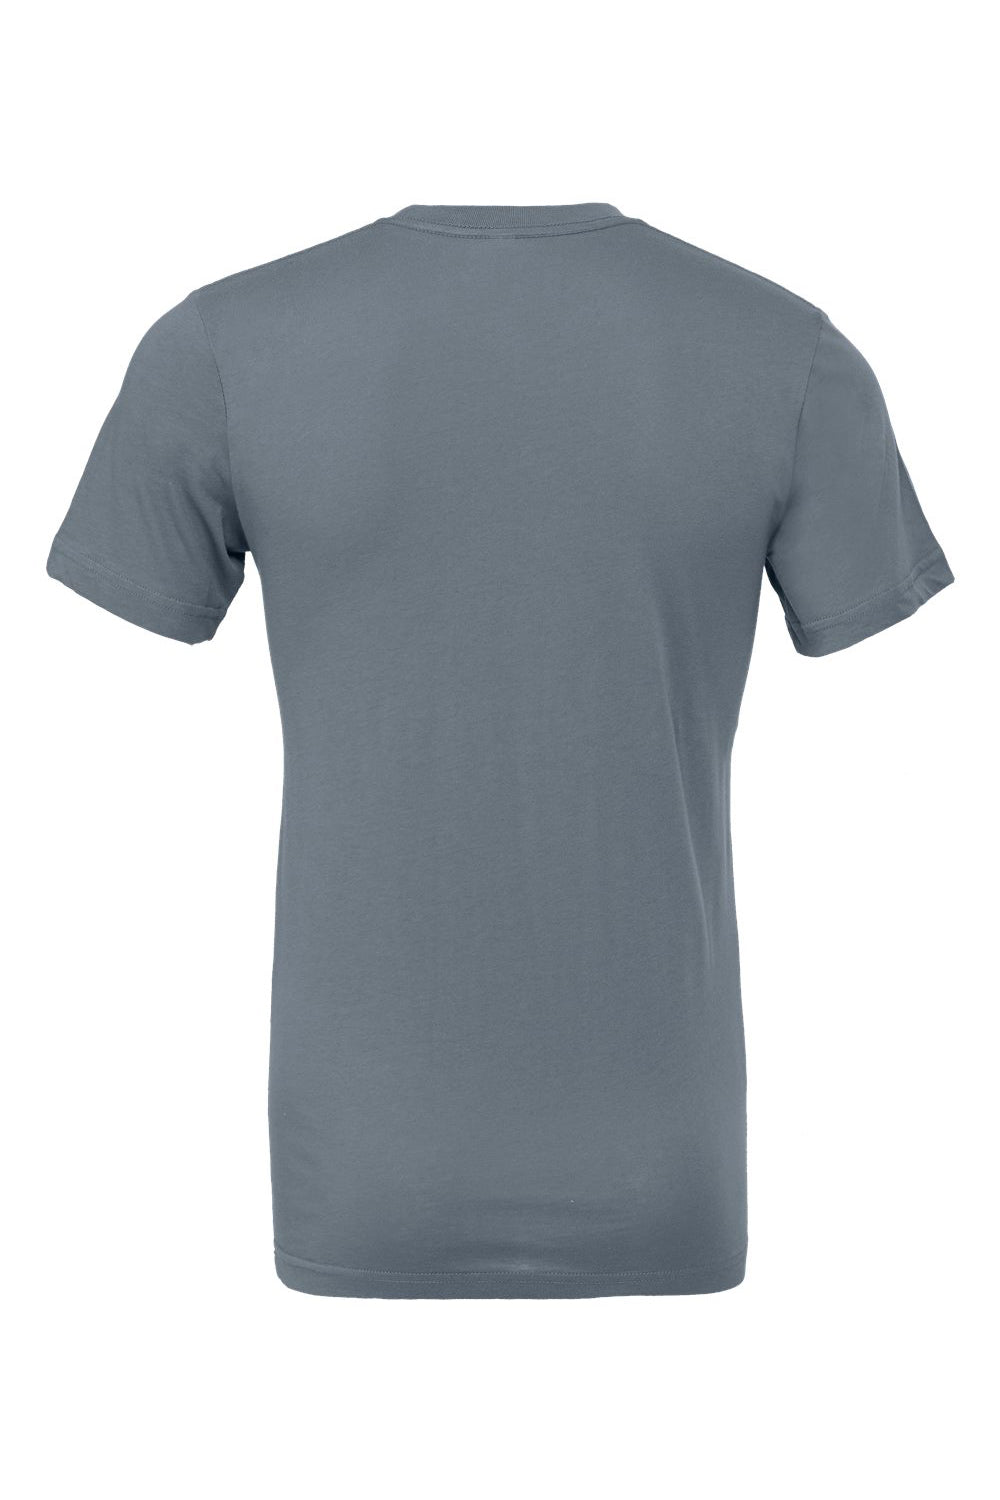 Bella + Canvas BC3001/3001C Mens Jersey Short Sleeve Crewneck T-Shirt Steel Blue Flat Back